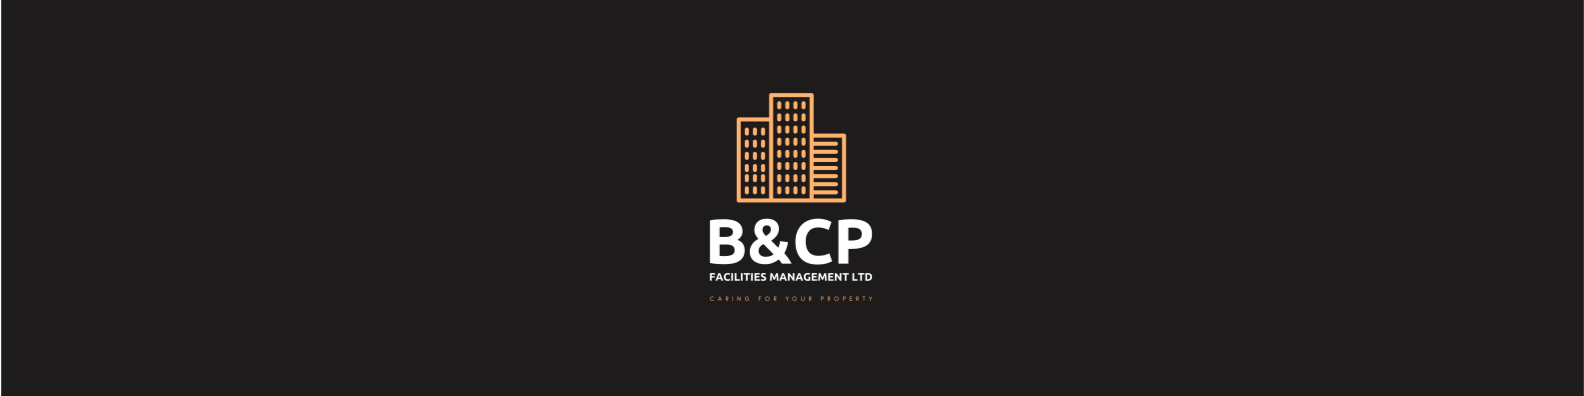 B&CP Facilities Management